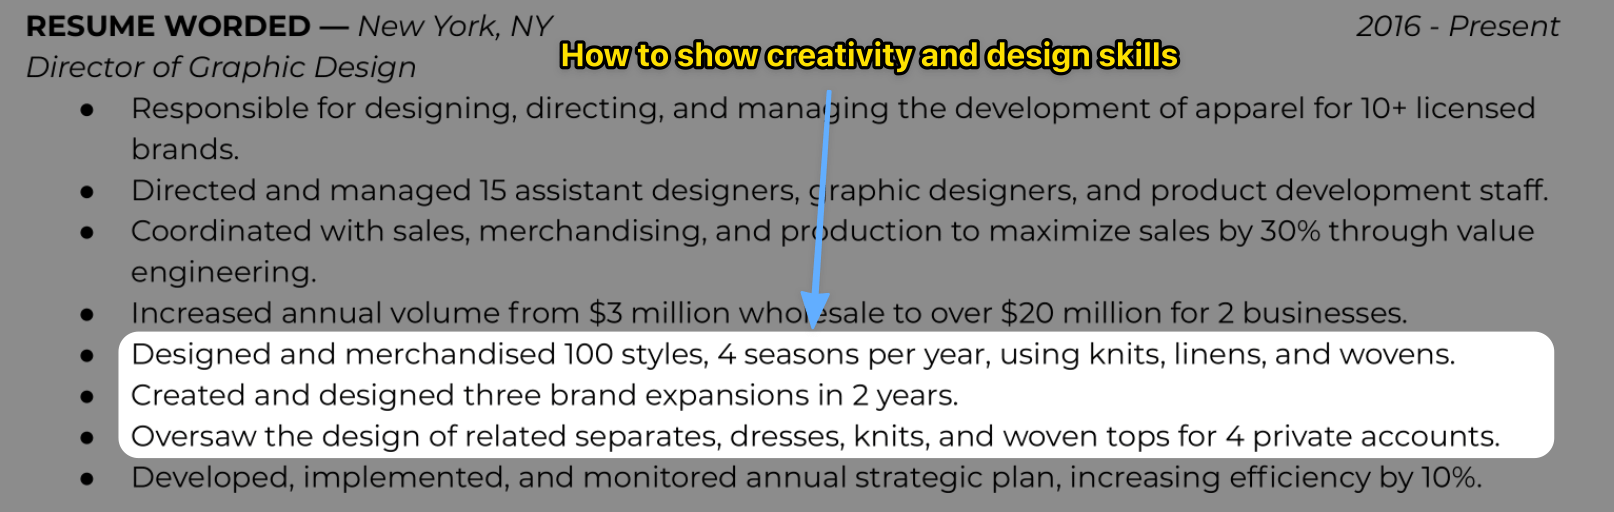 Tailored to the creative design job - Creative Graphic Designer Resume